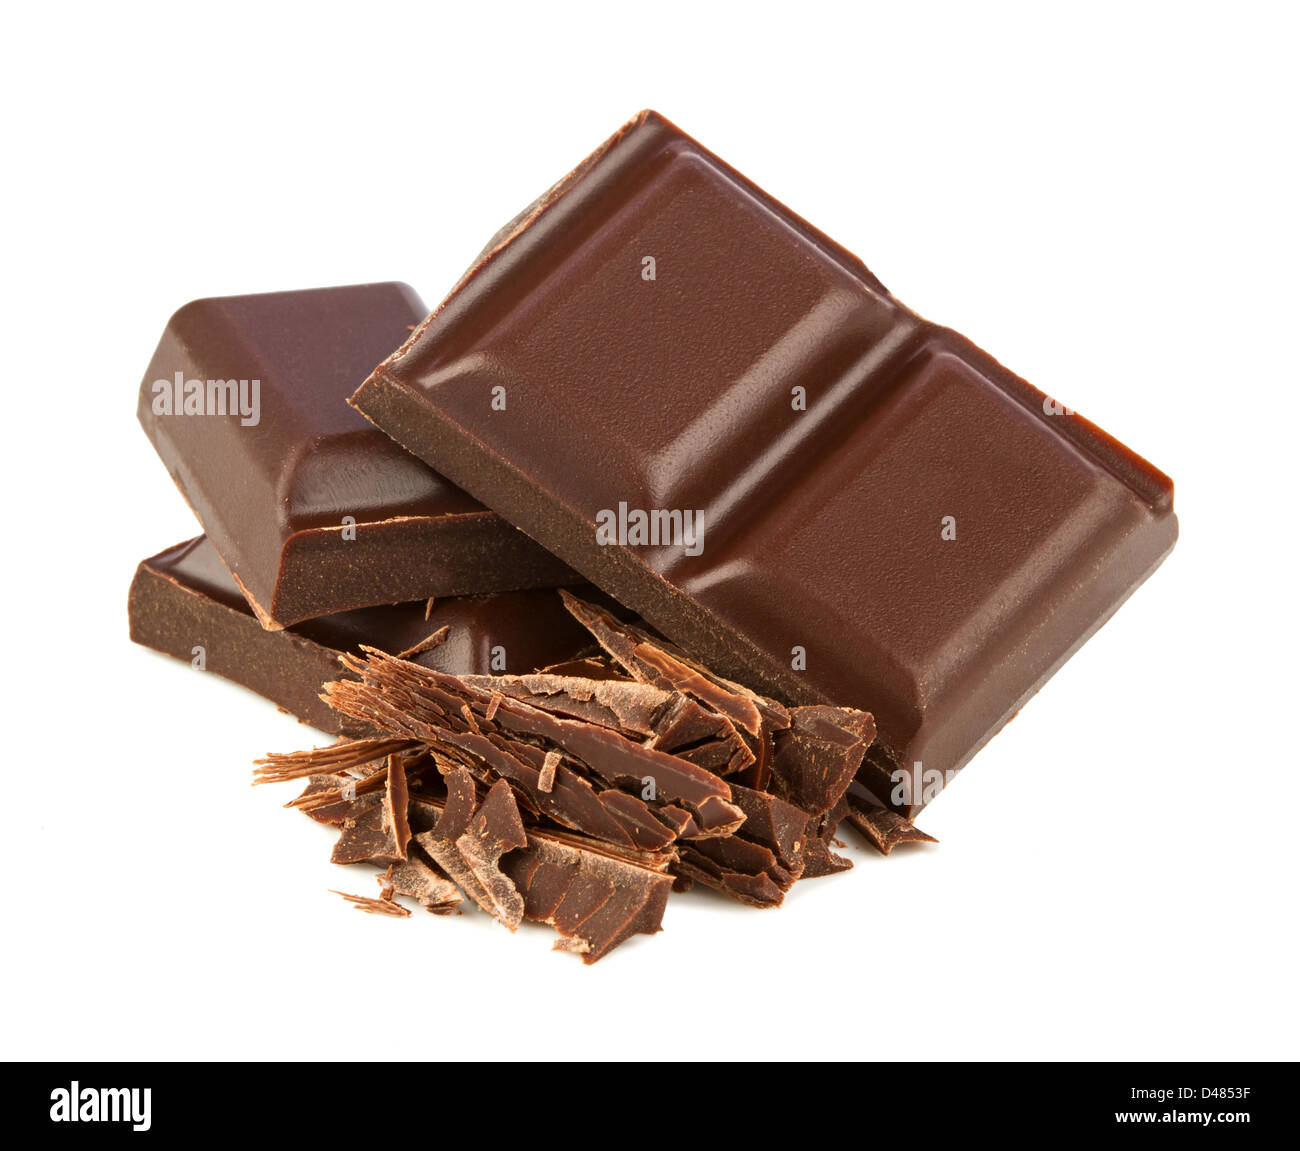 Pila de chocolate oscuro Foto de stock